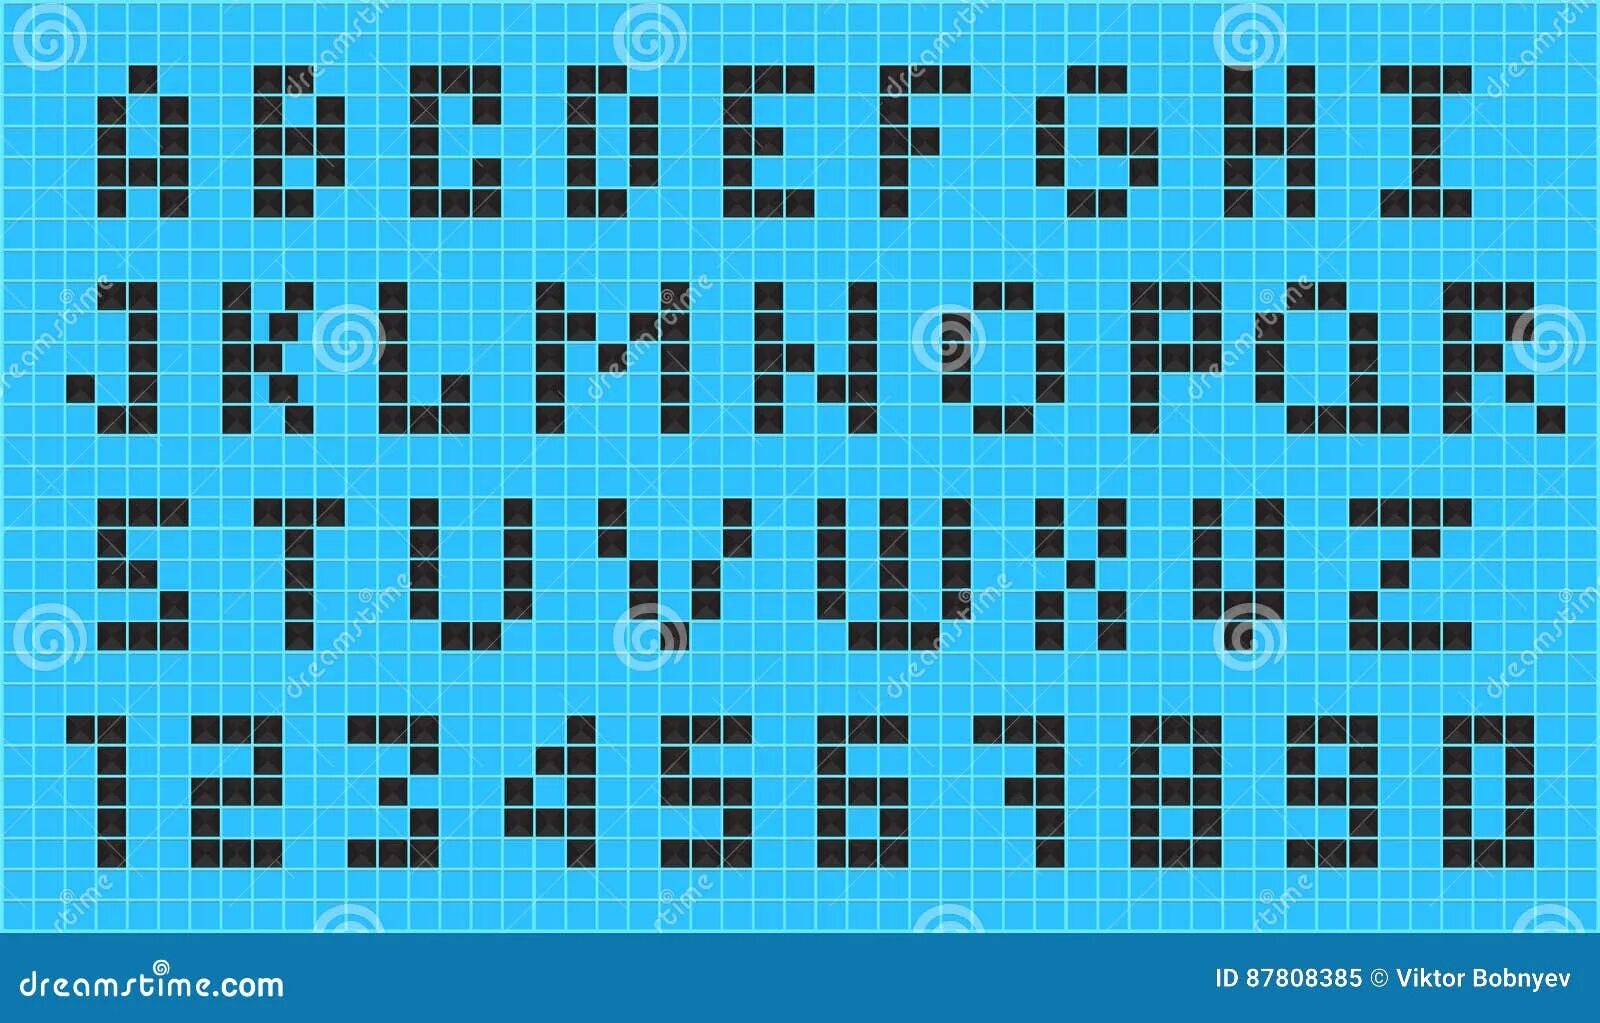 Шрифт 8. Буквы пикселями. Буквы из пикселей. Буквы 8 бит. Пиксельные буквы и цифры.